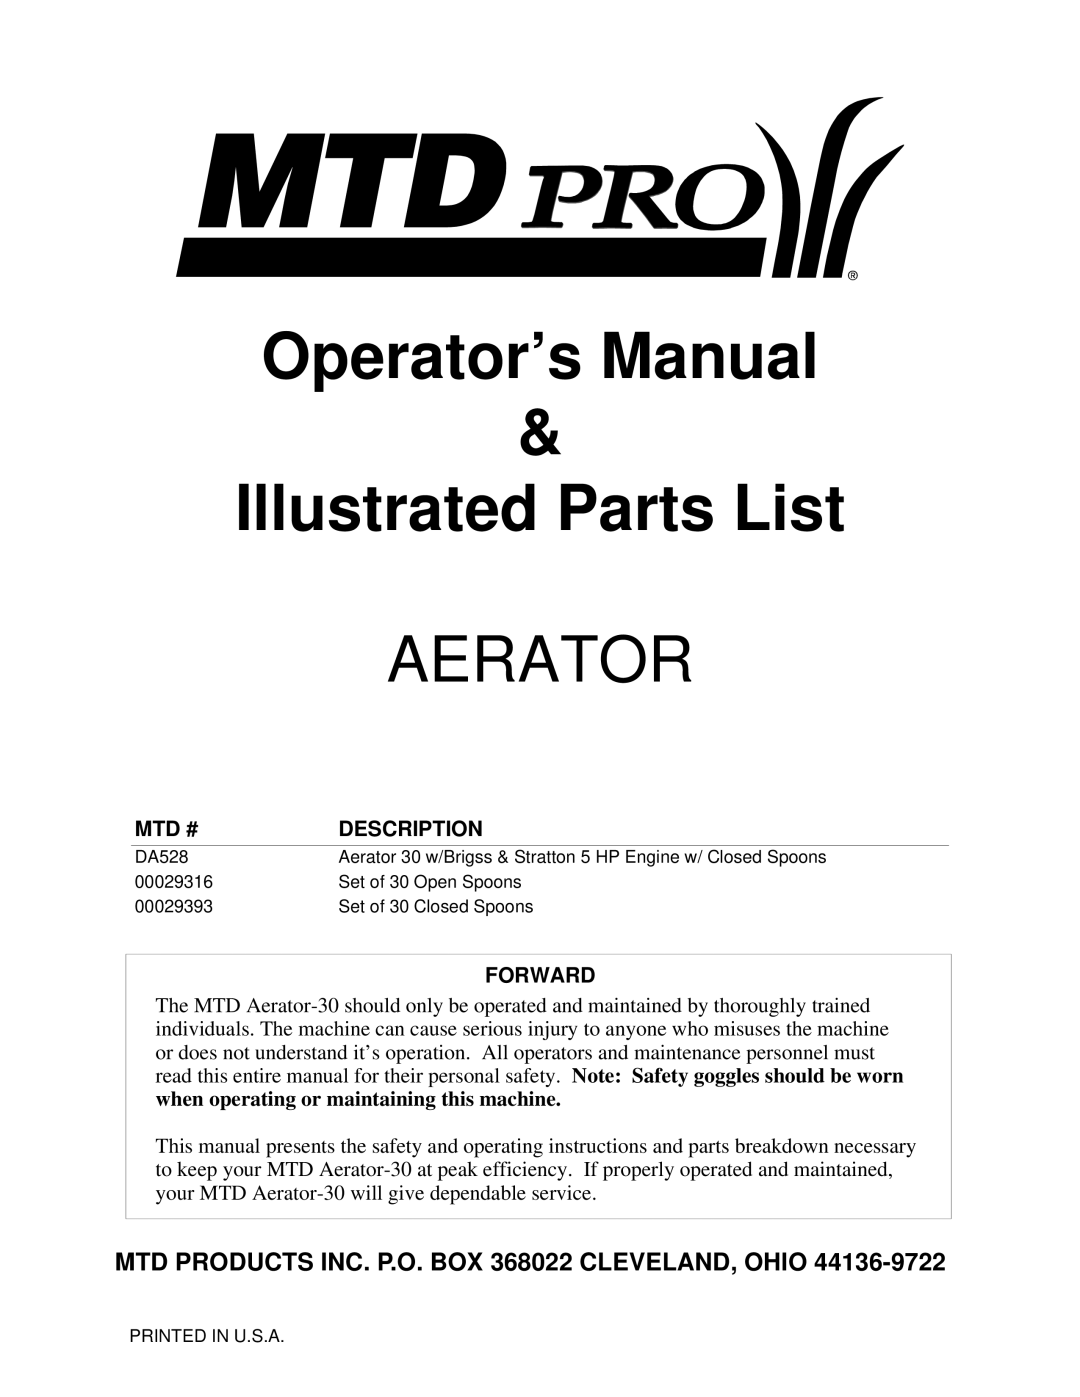 MTD DA528 operating instructions Operator’s Manual & Illustrated Parts List, Aerator, Mtd #, Description, Forward 